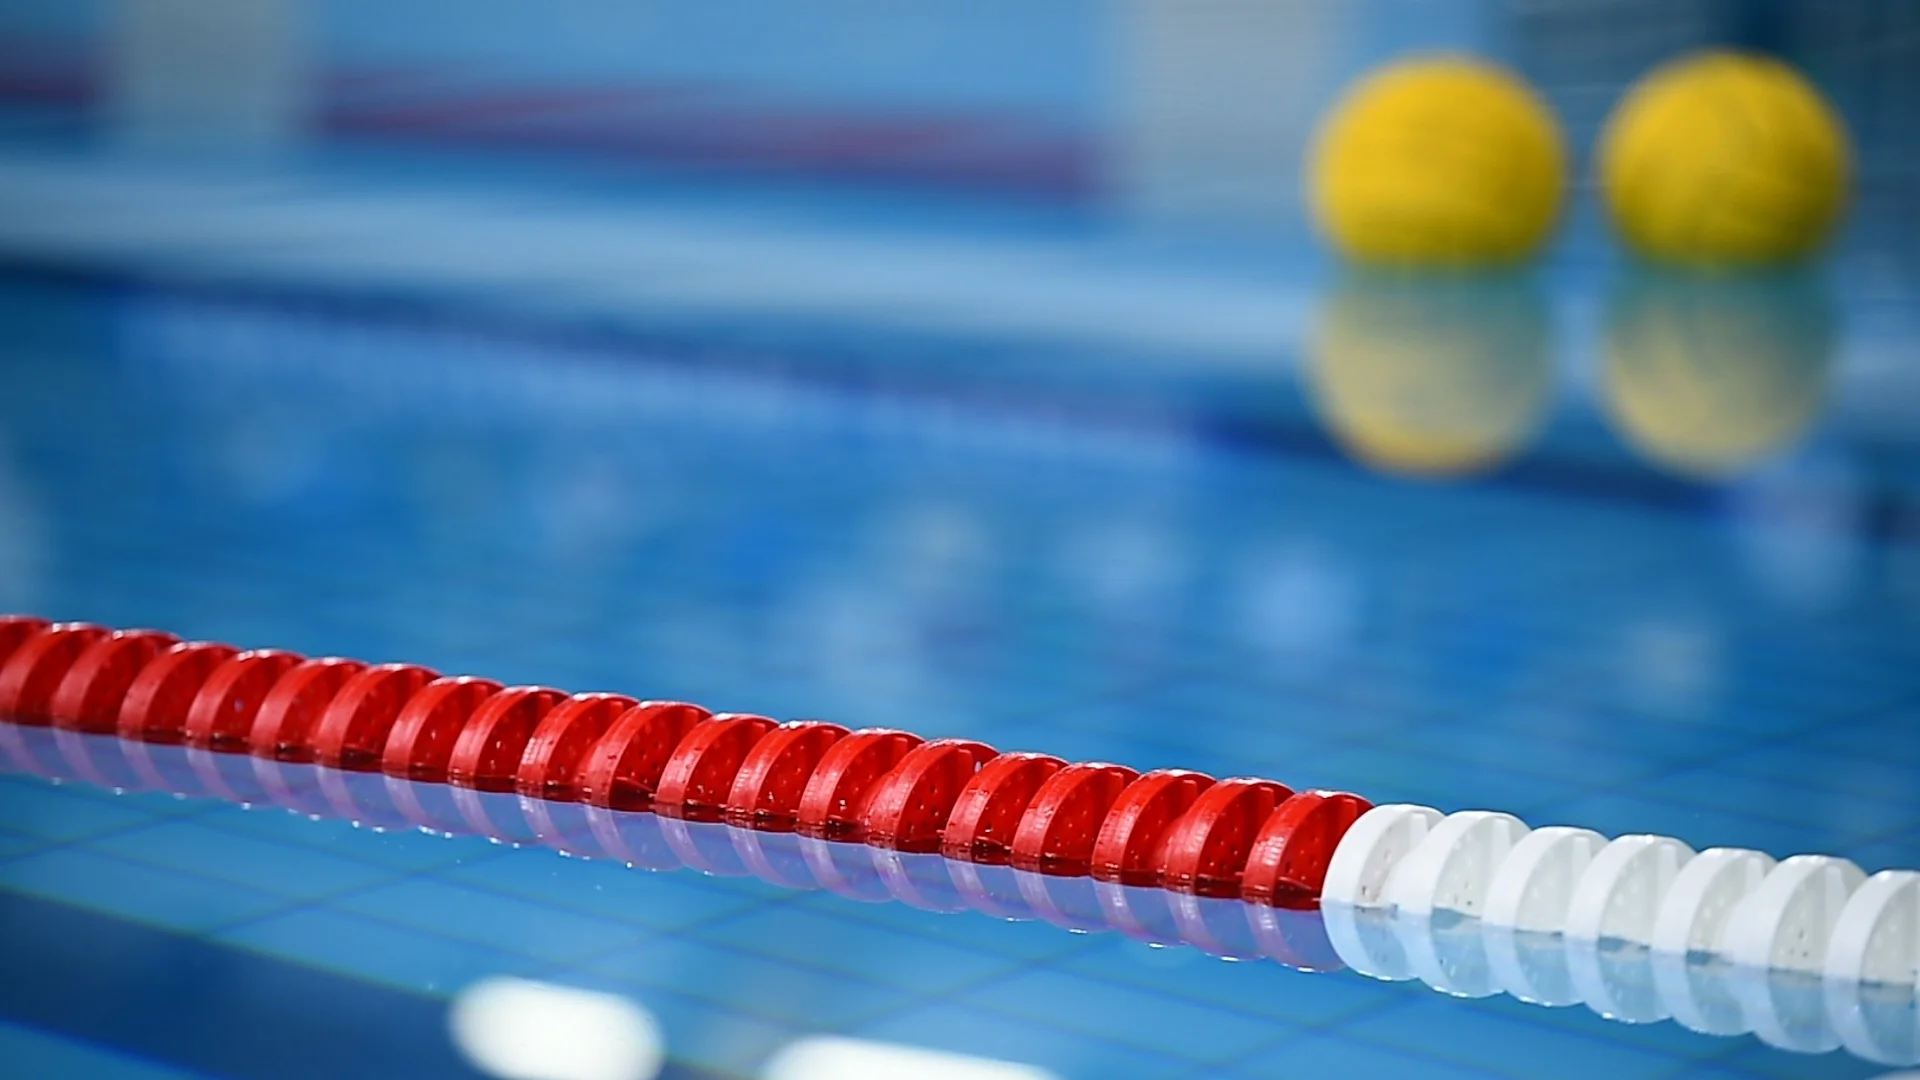 Olympic swimming pool lane dividers duri, Stock Video